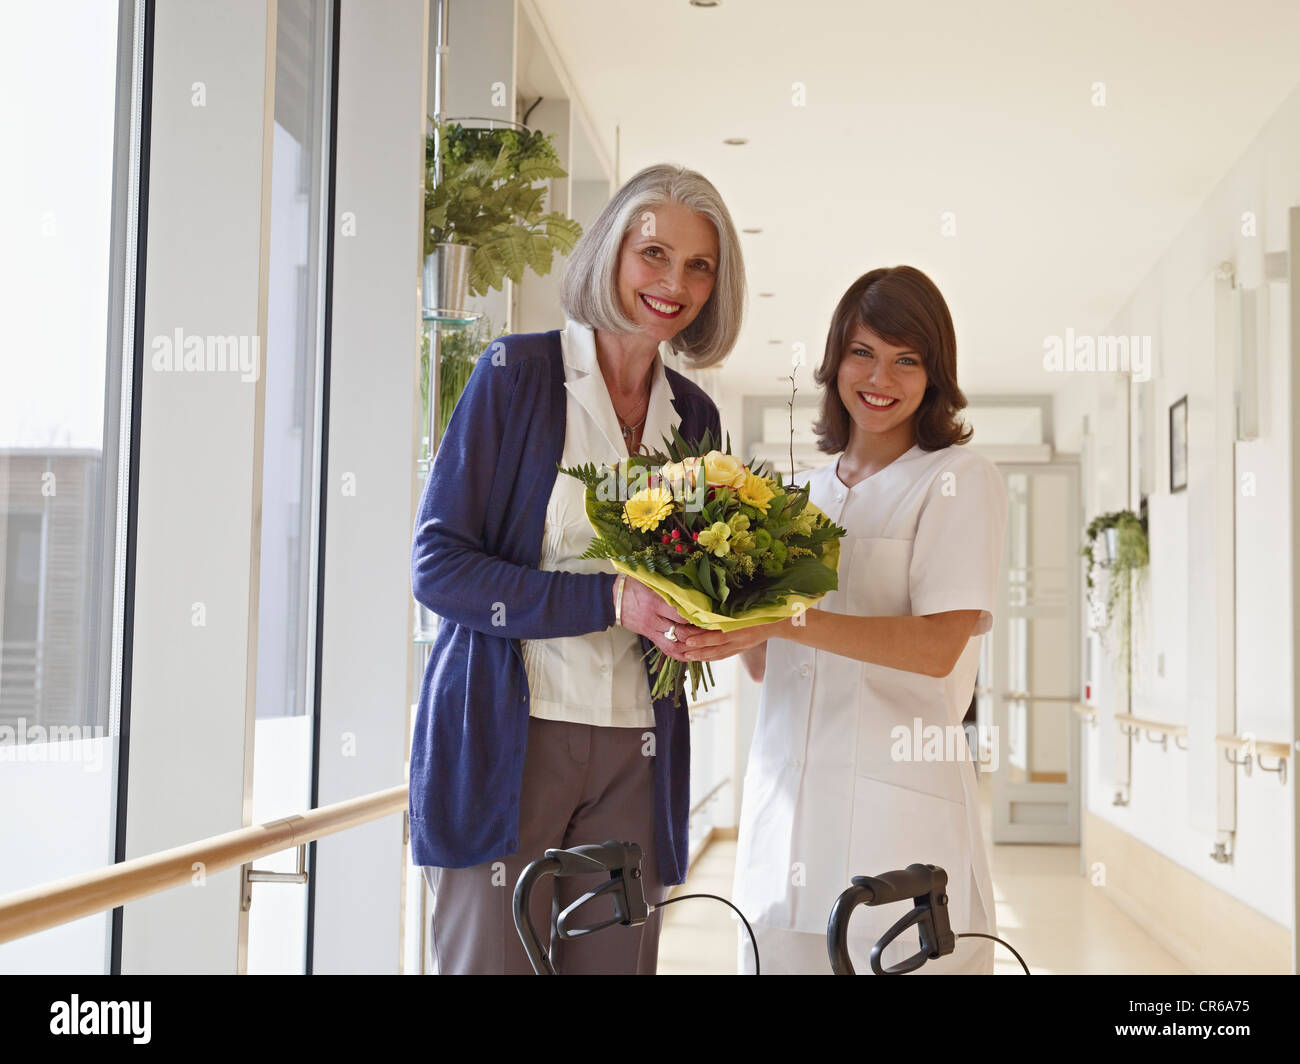 Germany, Cologne, Senior women and caretaker holding bouquet in corridor of nursing room, smiling, portrait Stock Photo